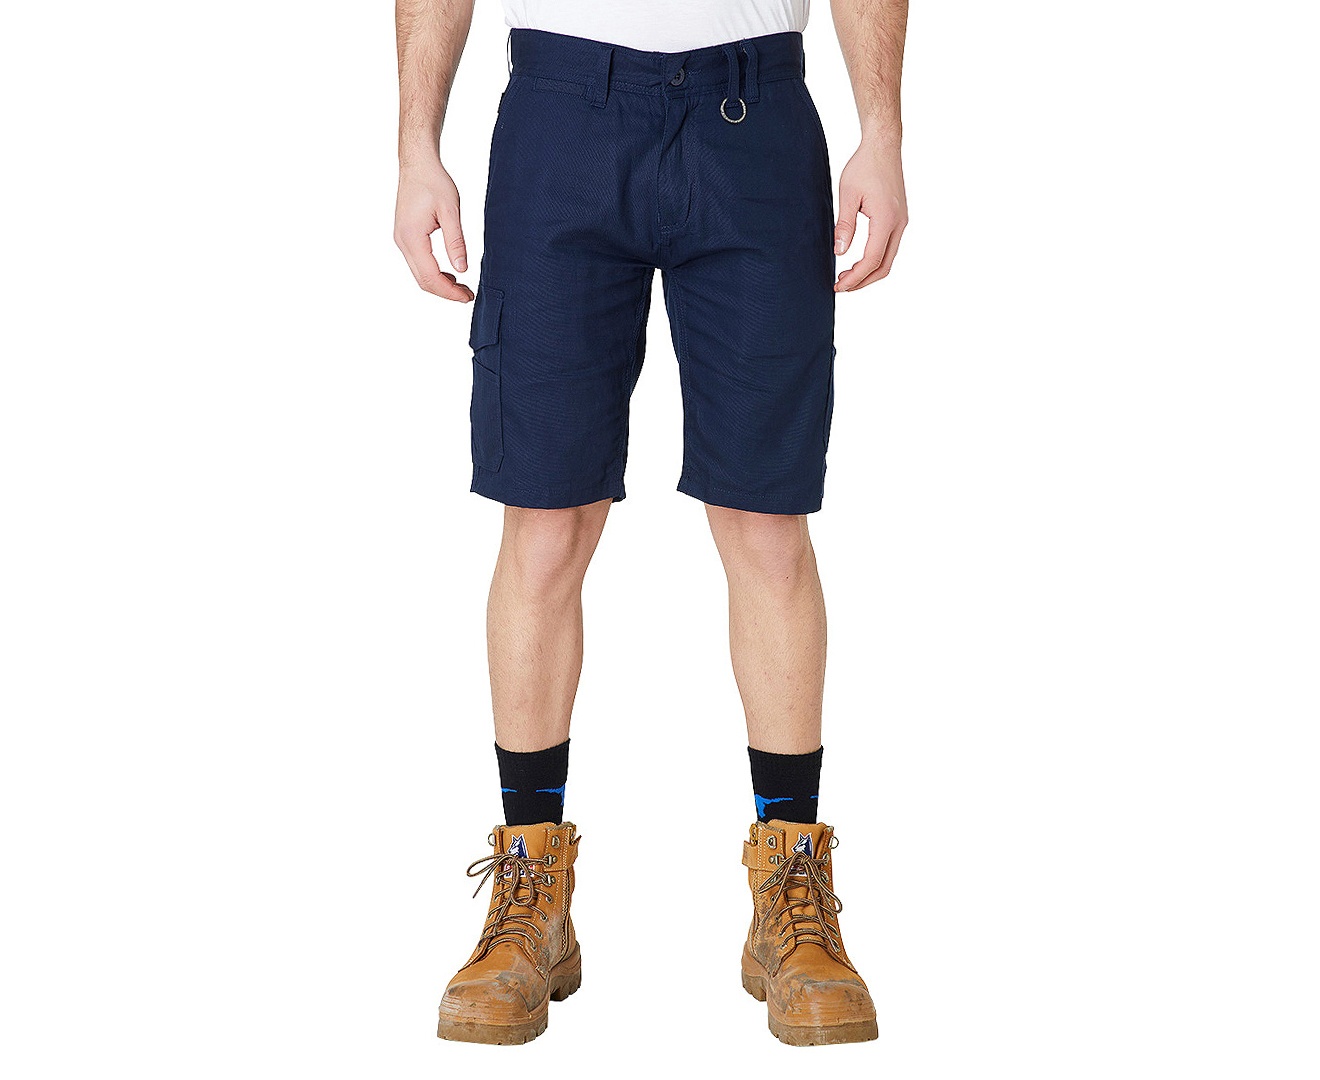 Elwood Workwear Men's Utility Shorts - Navy | Catch.com.au